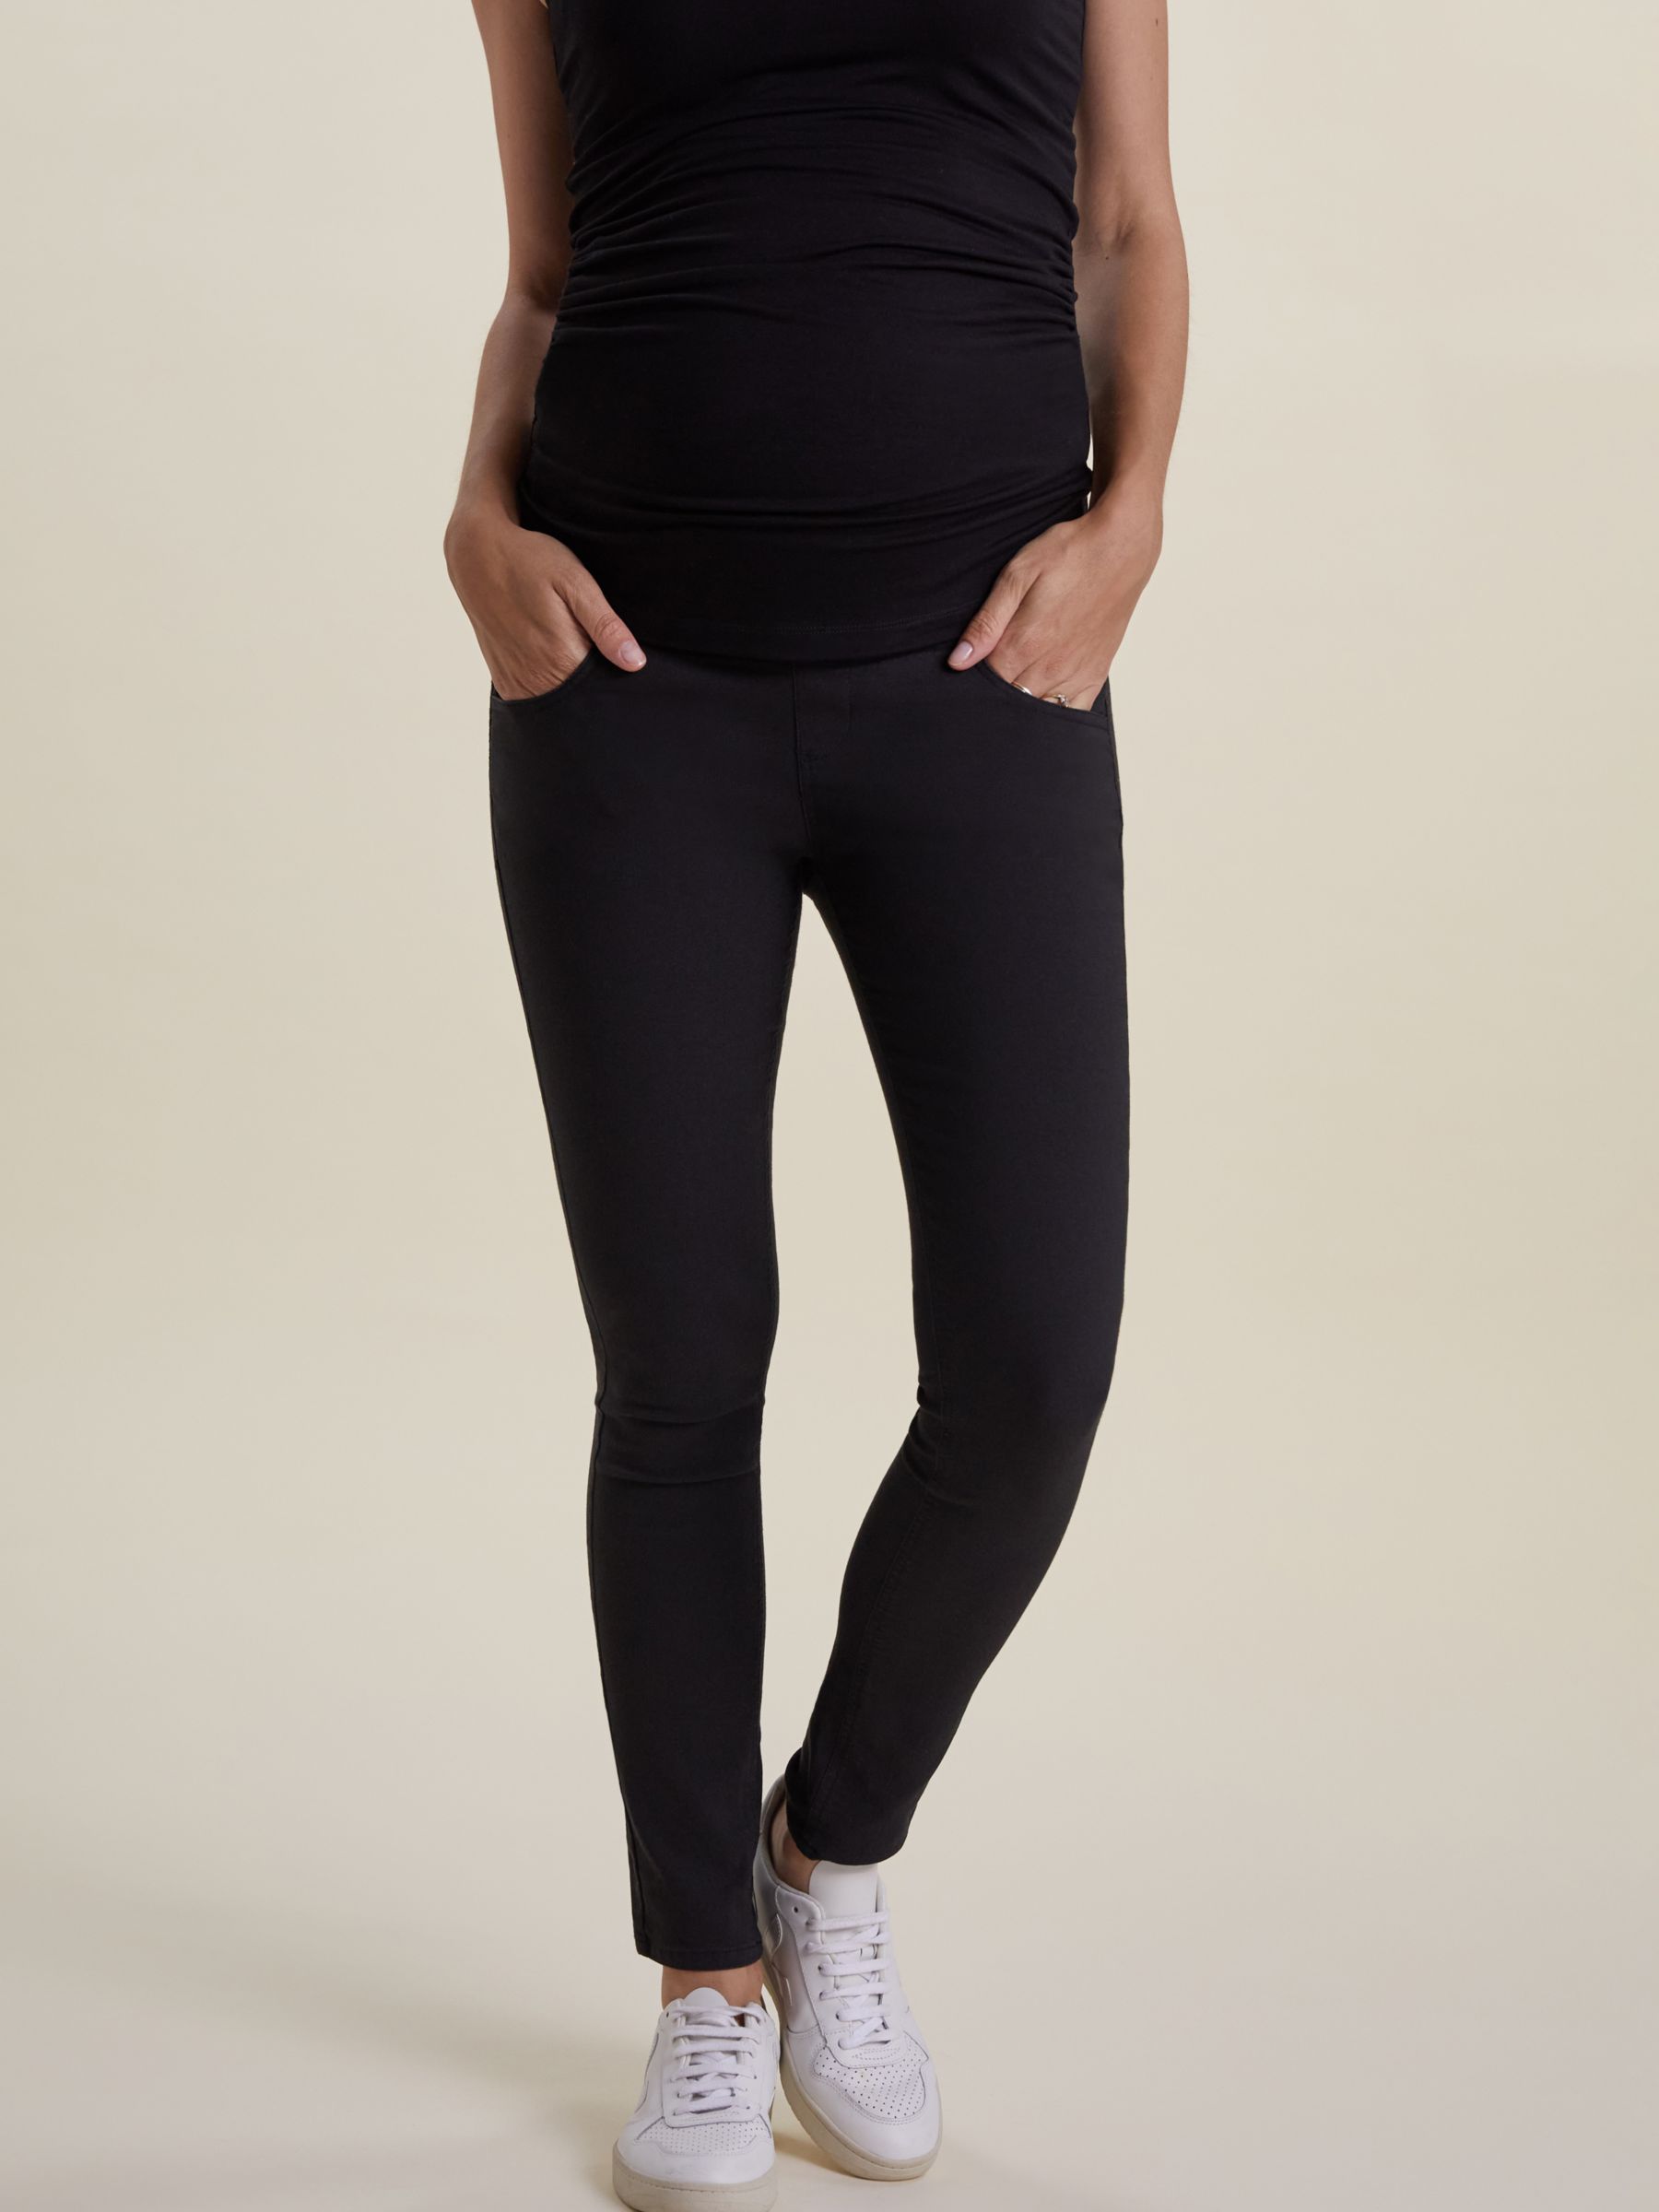 Isabella Oliver Stretch Maternity Skinny Jeans, Caviar Black, 8